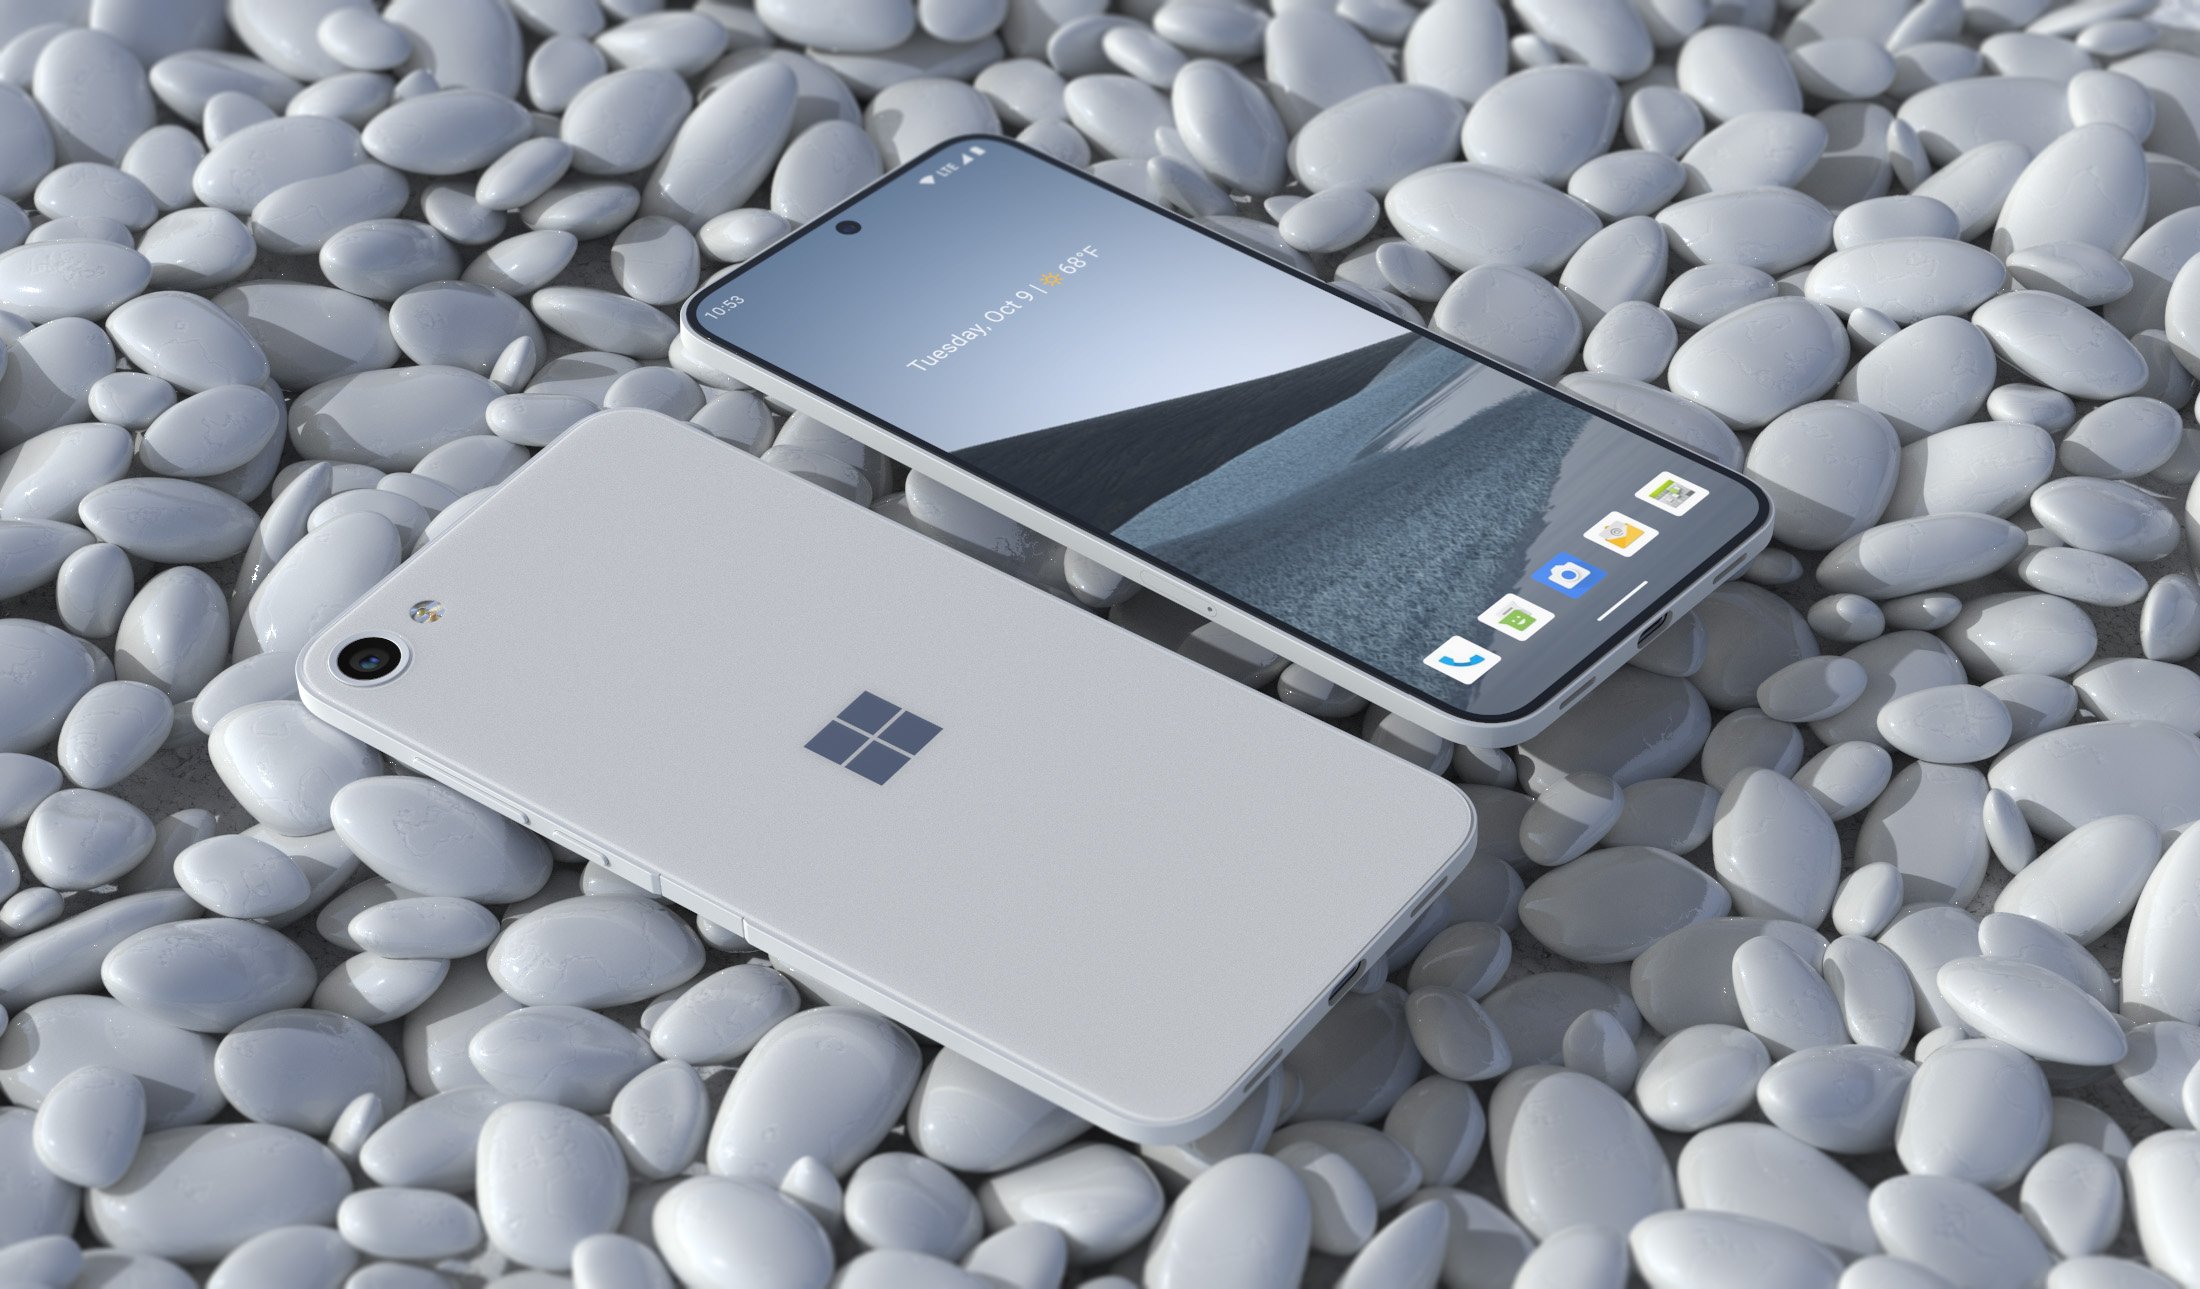 Microsoft Surface Solo concept render showcases the smartphone design